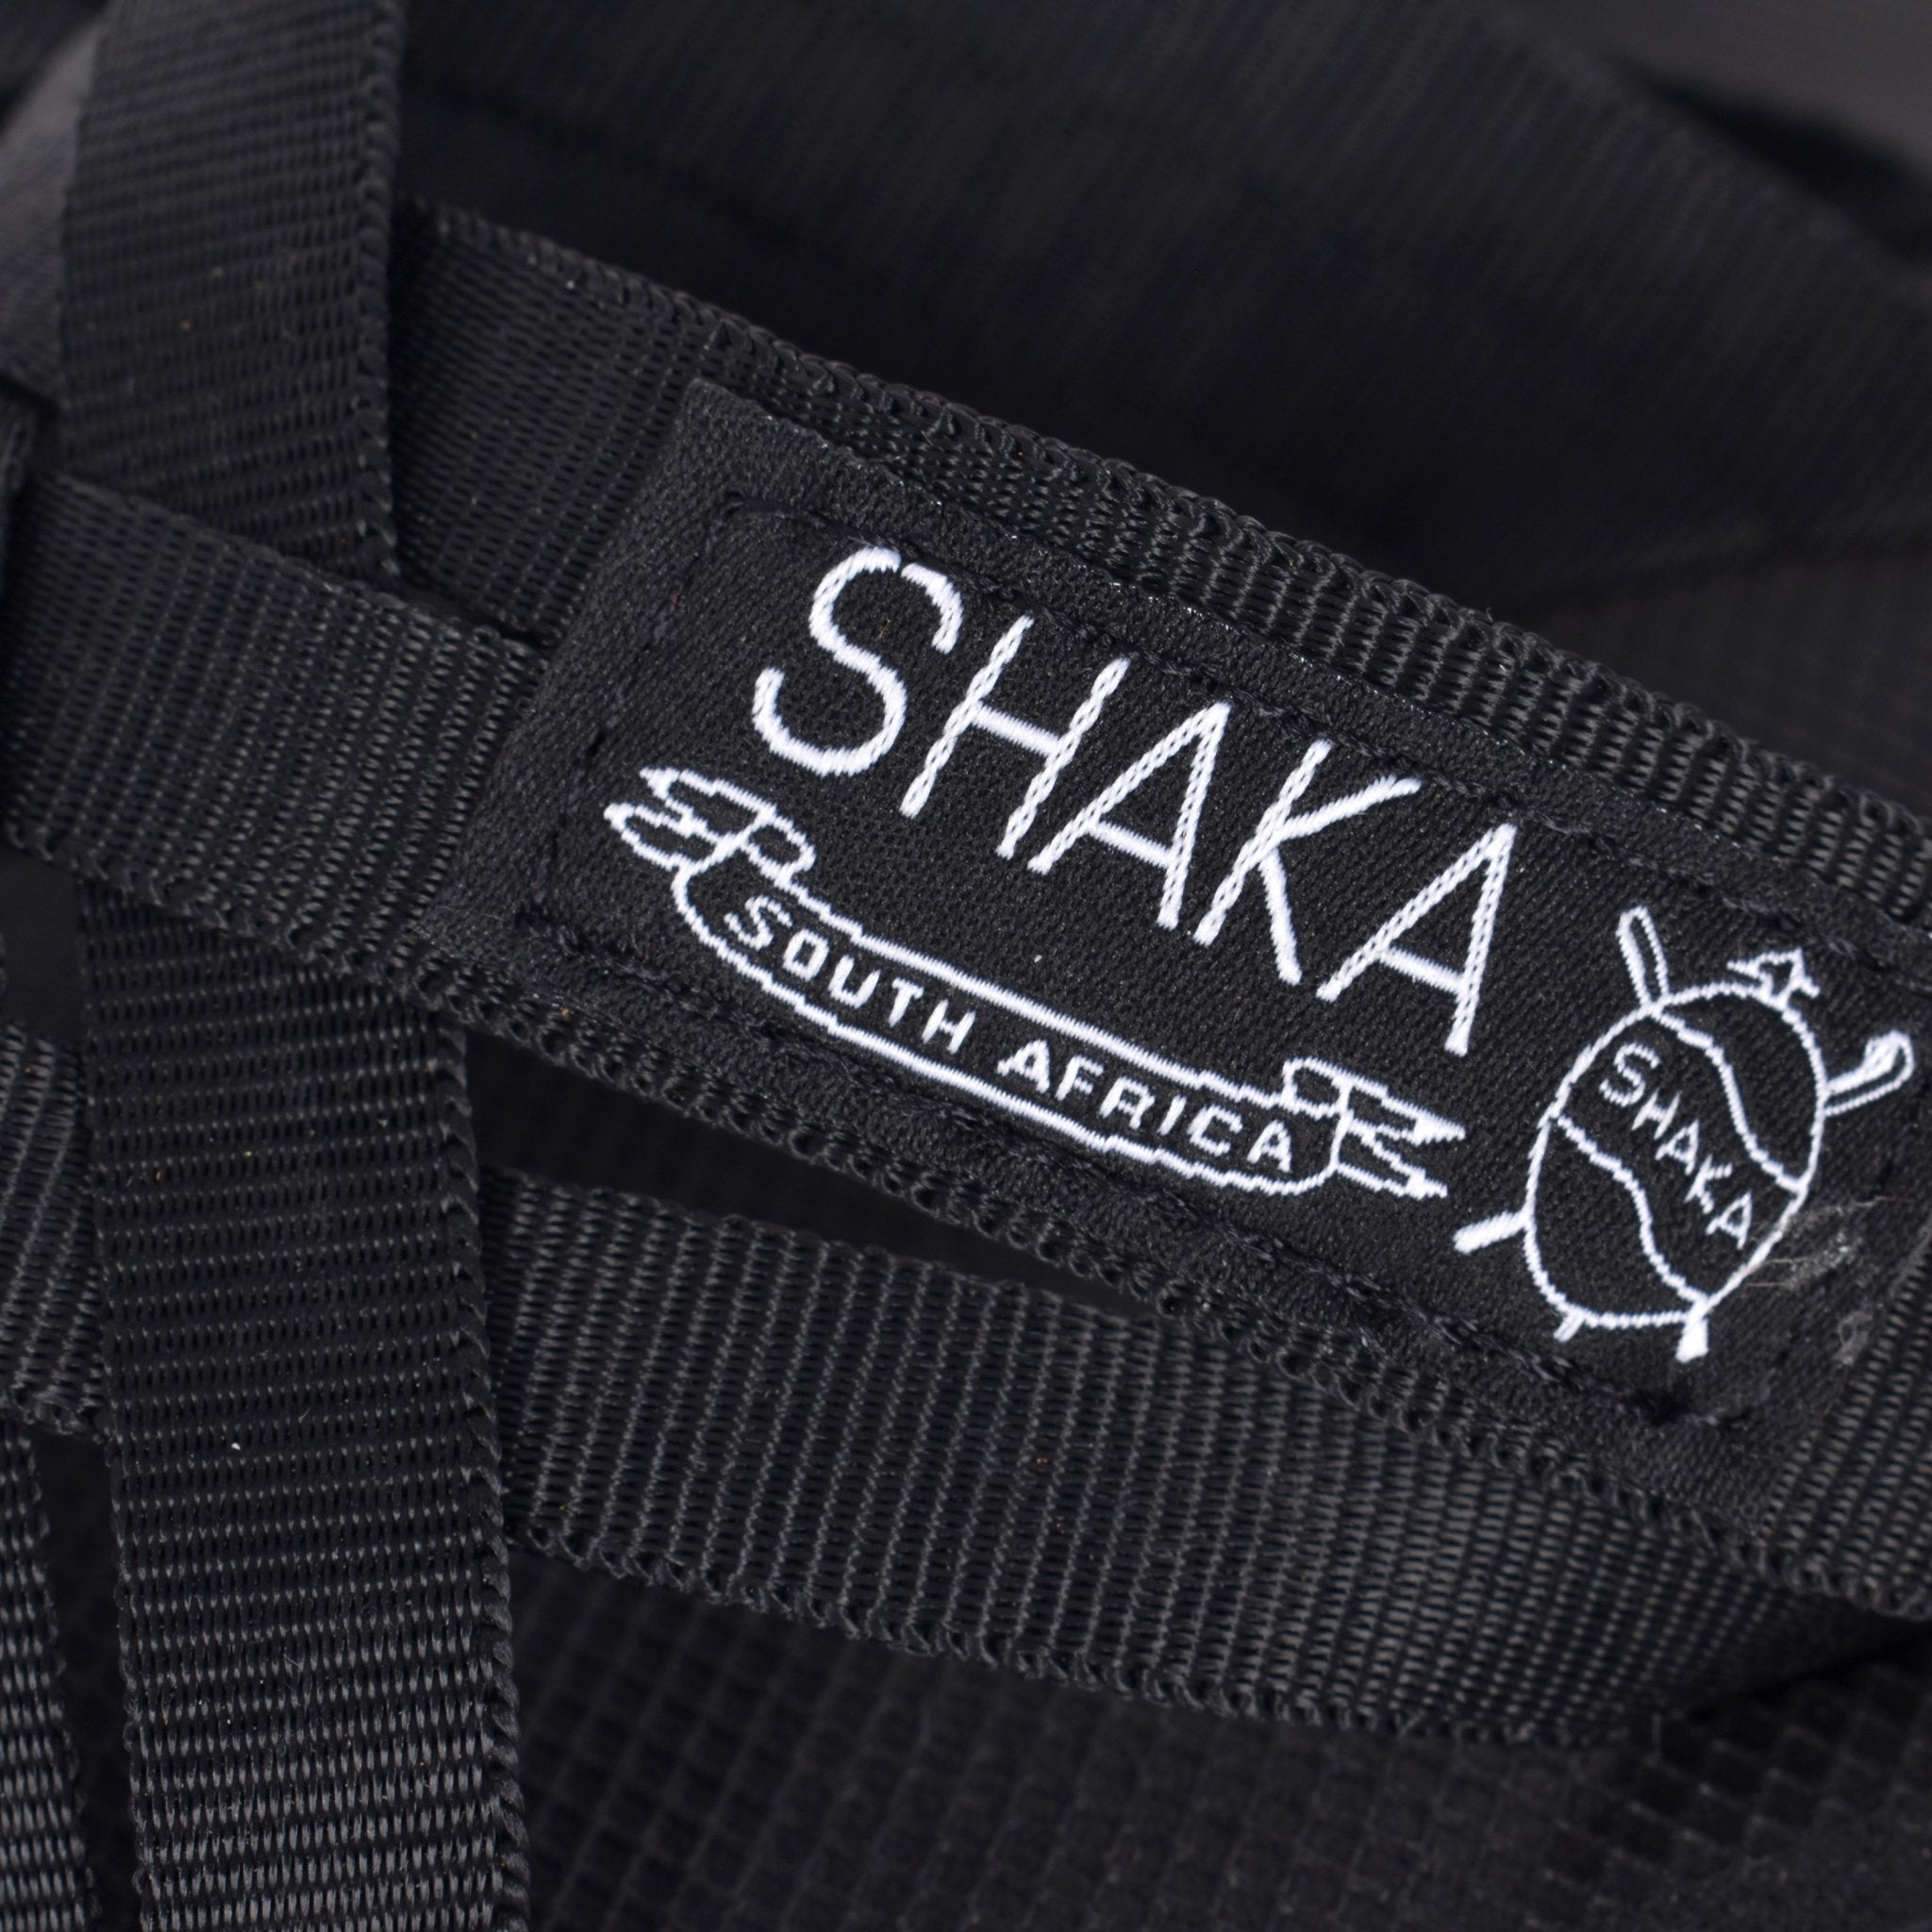 SHAKA スポーツサンダル LOS CABOS [メンズ/レディース] [春夏] 433151 - SHAKA(シャカ)公式オンラインストア